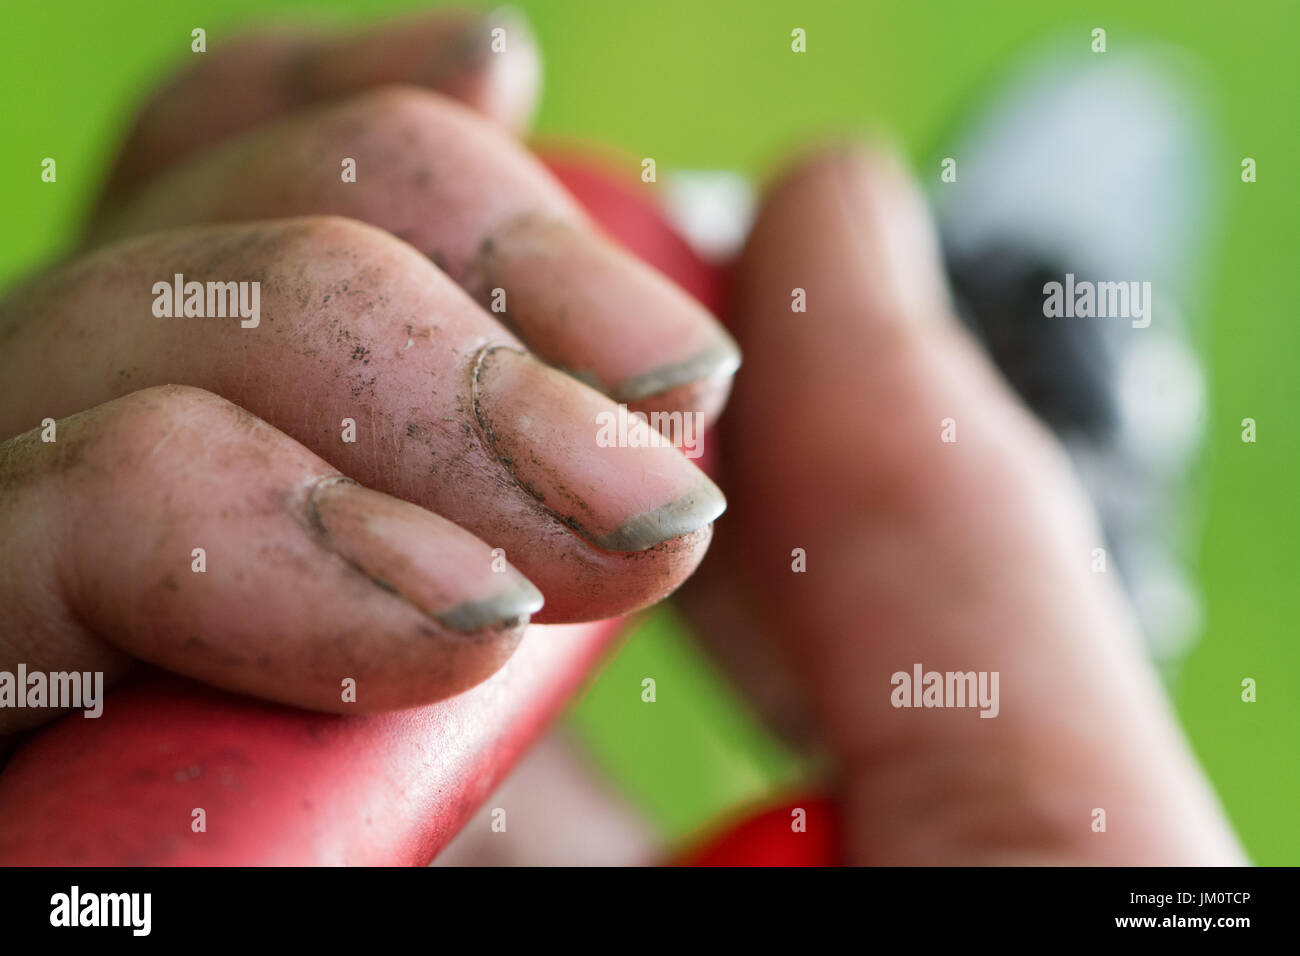 gardening hands with soil dirt under fingernails Stock Photo